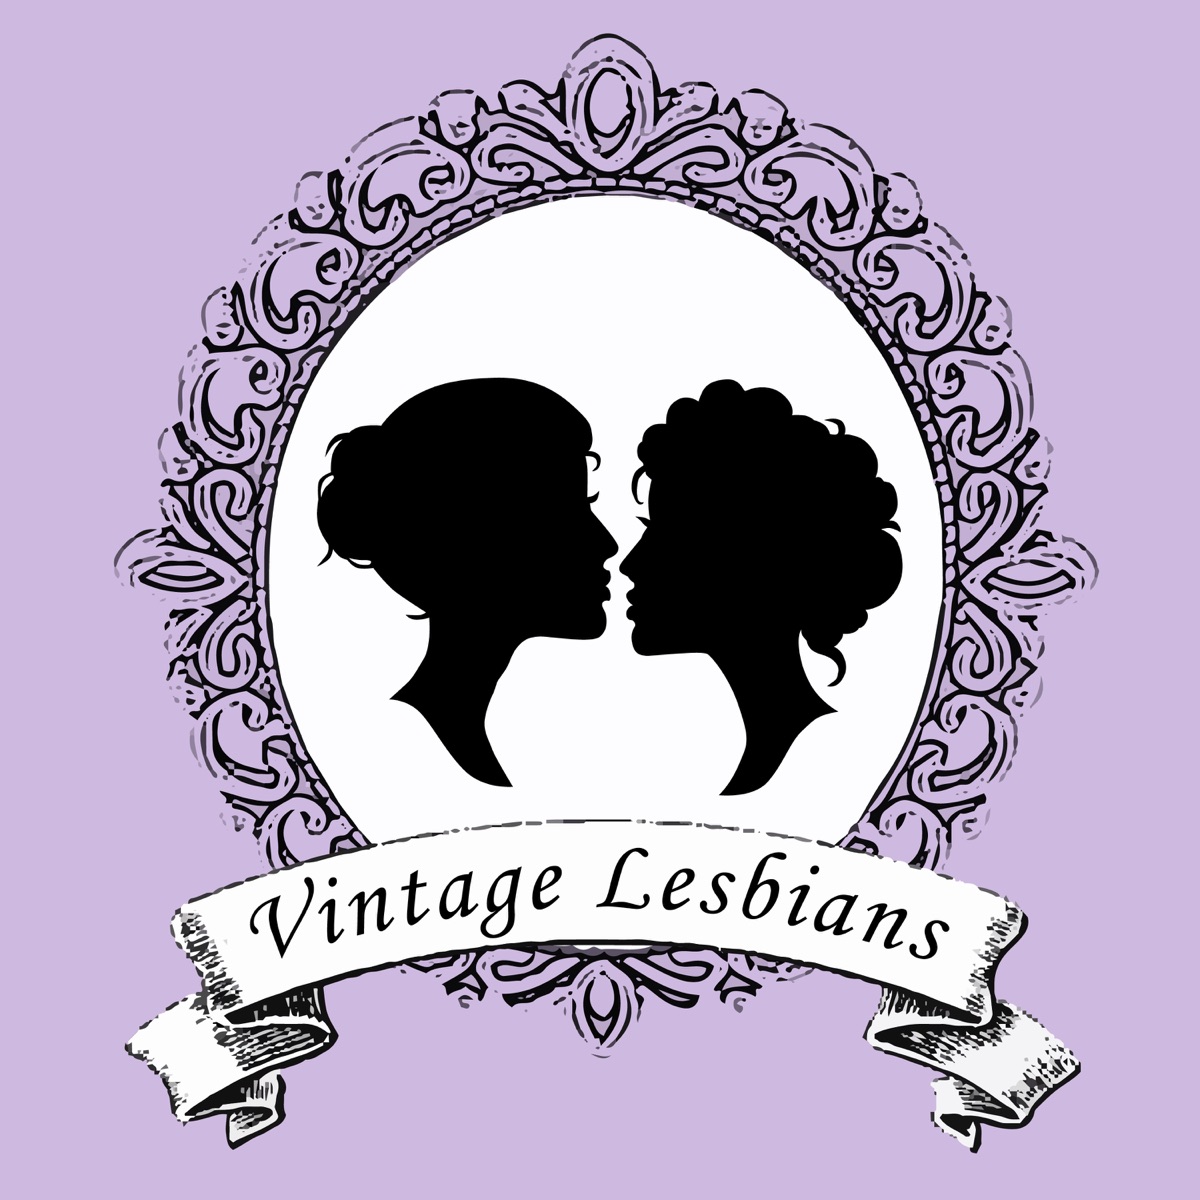 Vintage italian lesbian